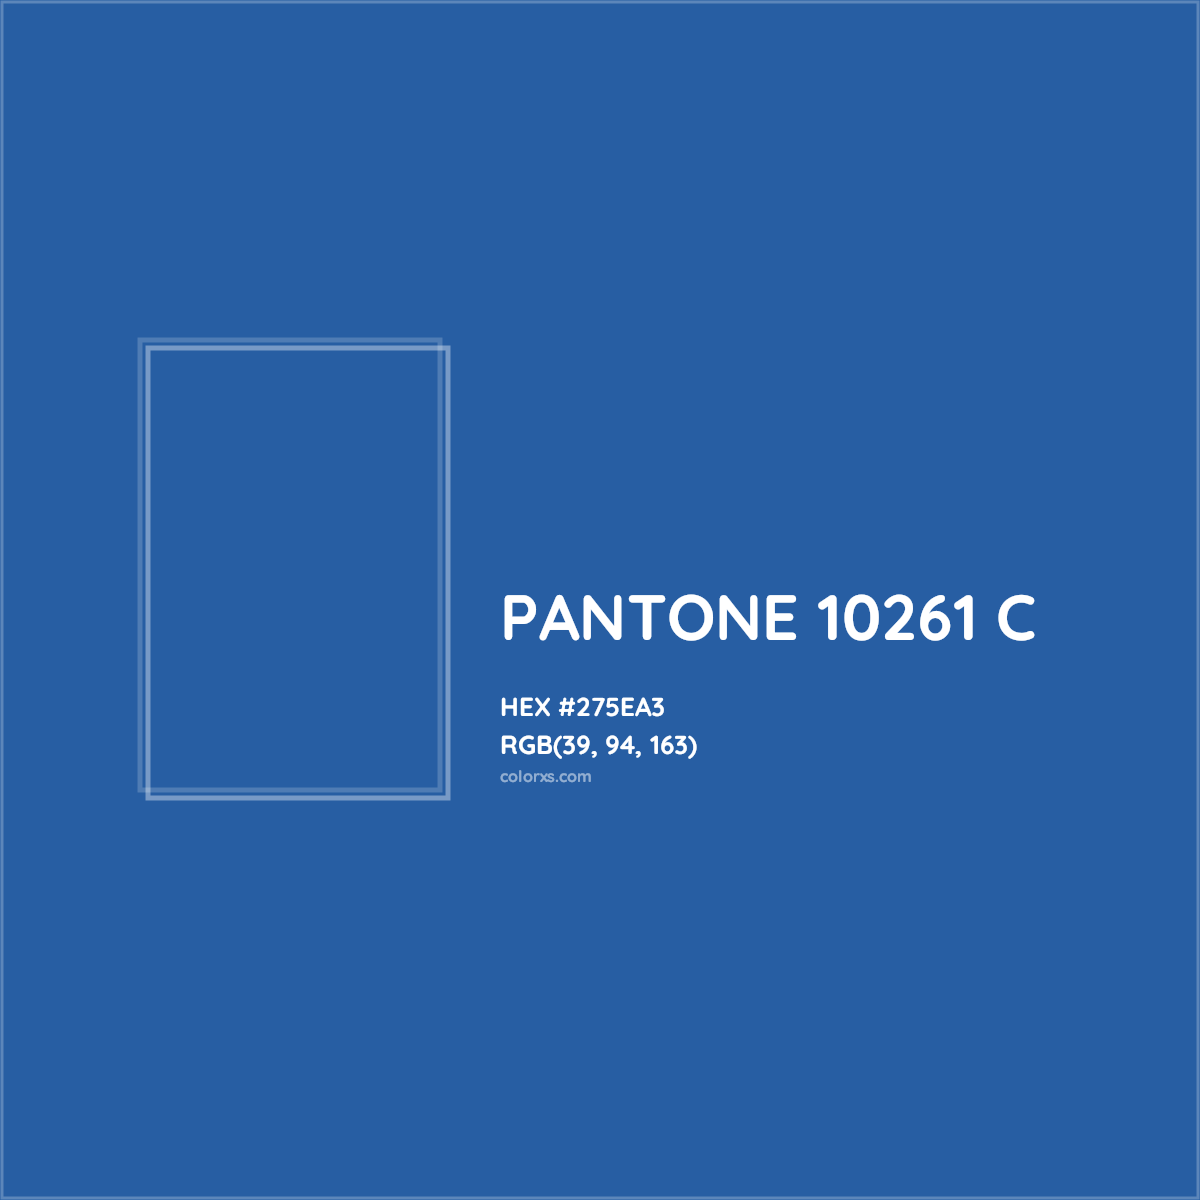 HEX #275EA3 PANTONE 10261 C CMS Pantone PMS - Color Code